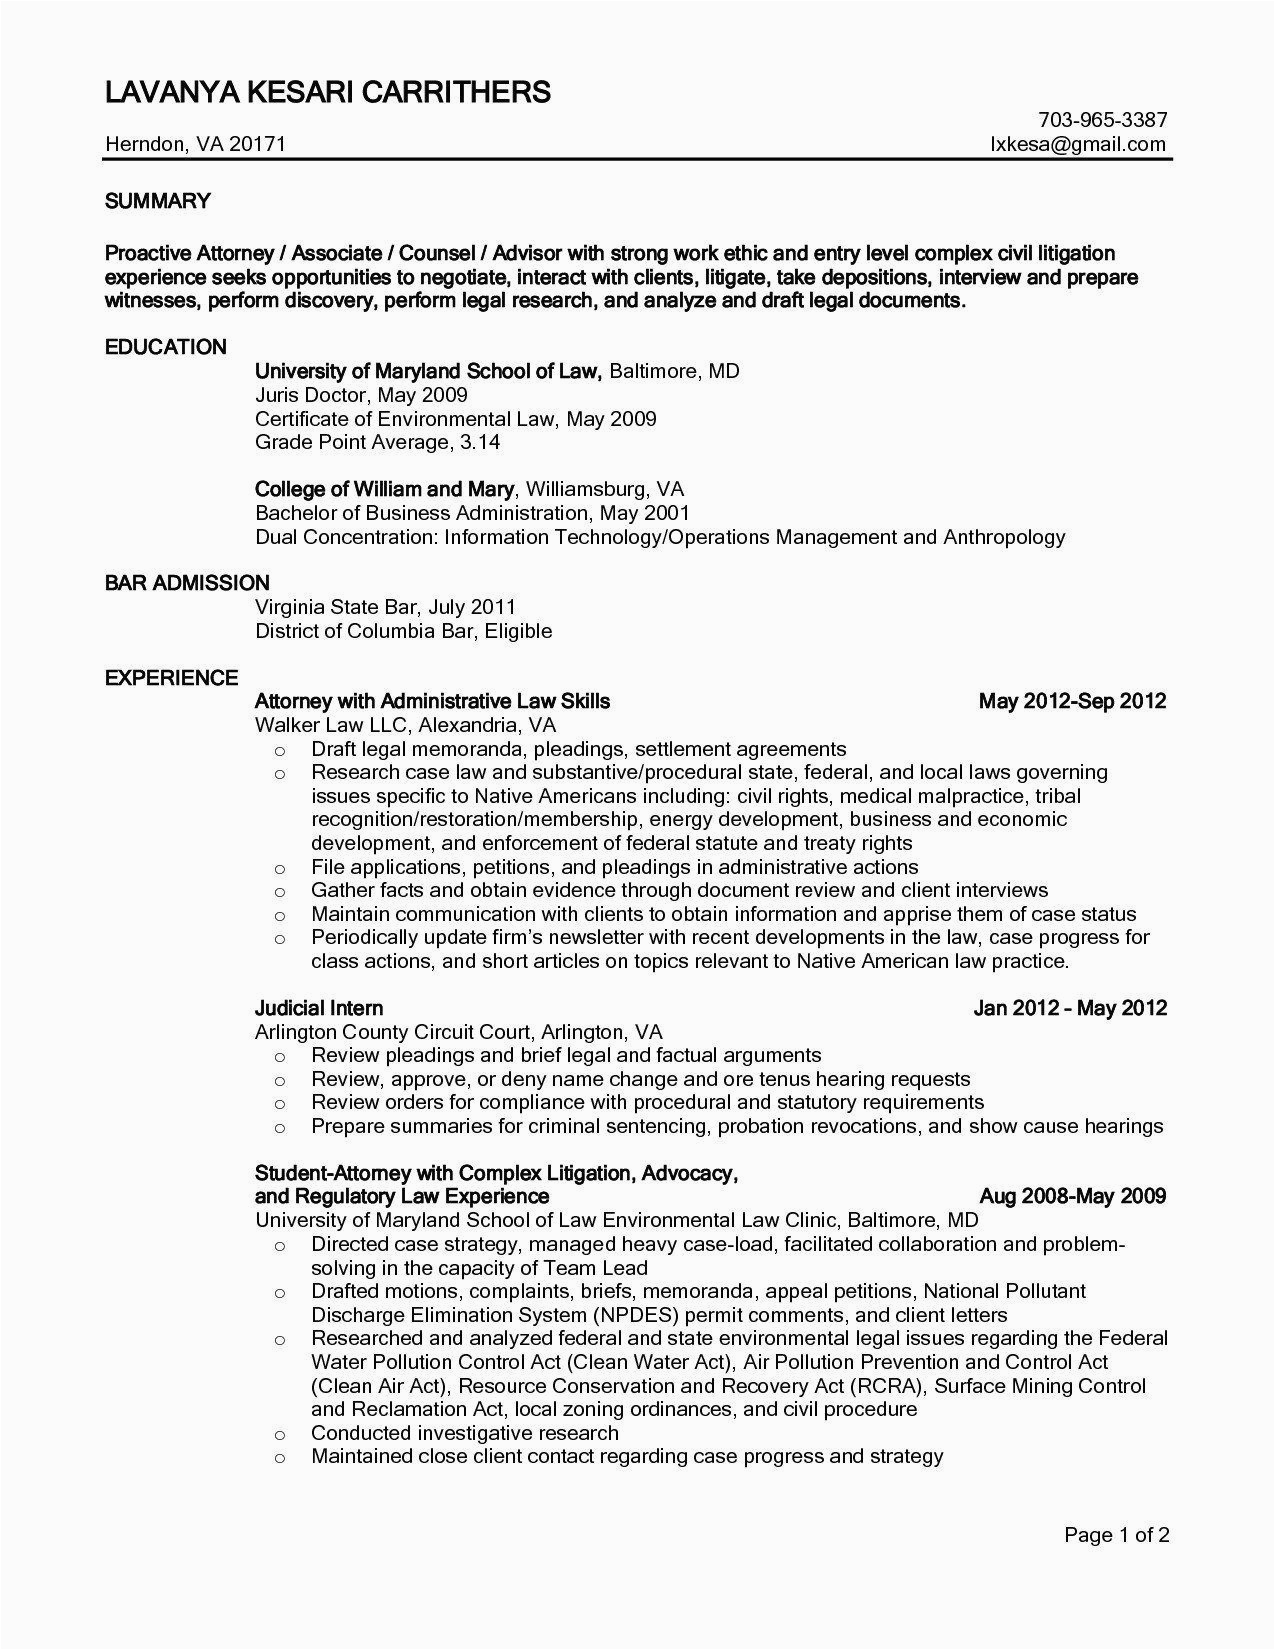 Sample Resume Recent Law School Graduate Law School Admissions Resume Template Resume